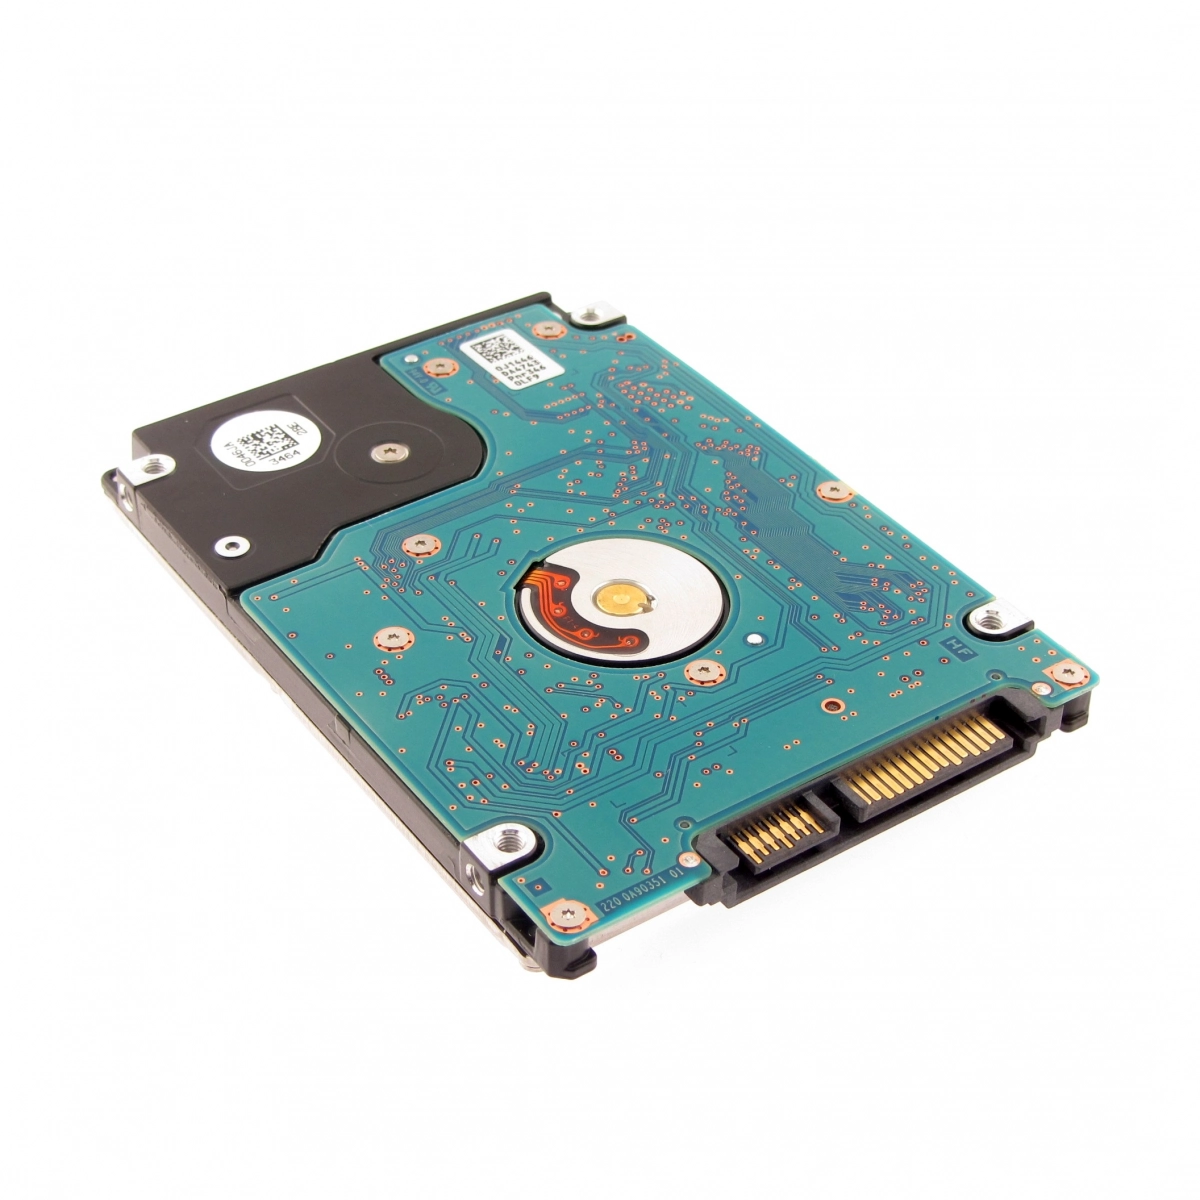 Notebook-Festplatte 500GB, 5400rpm, 16MB für LENOVO G510